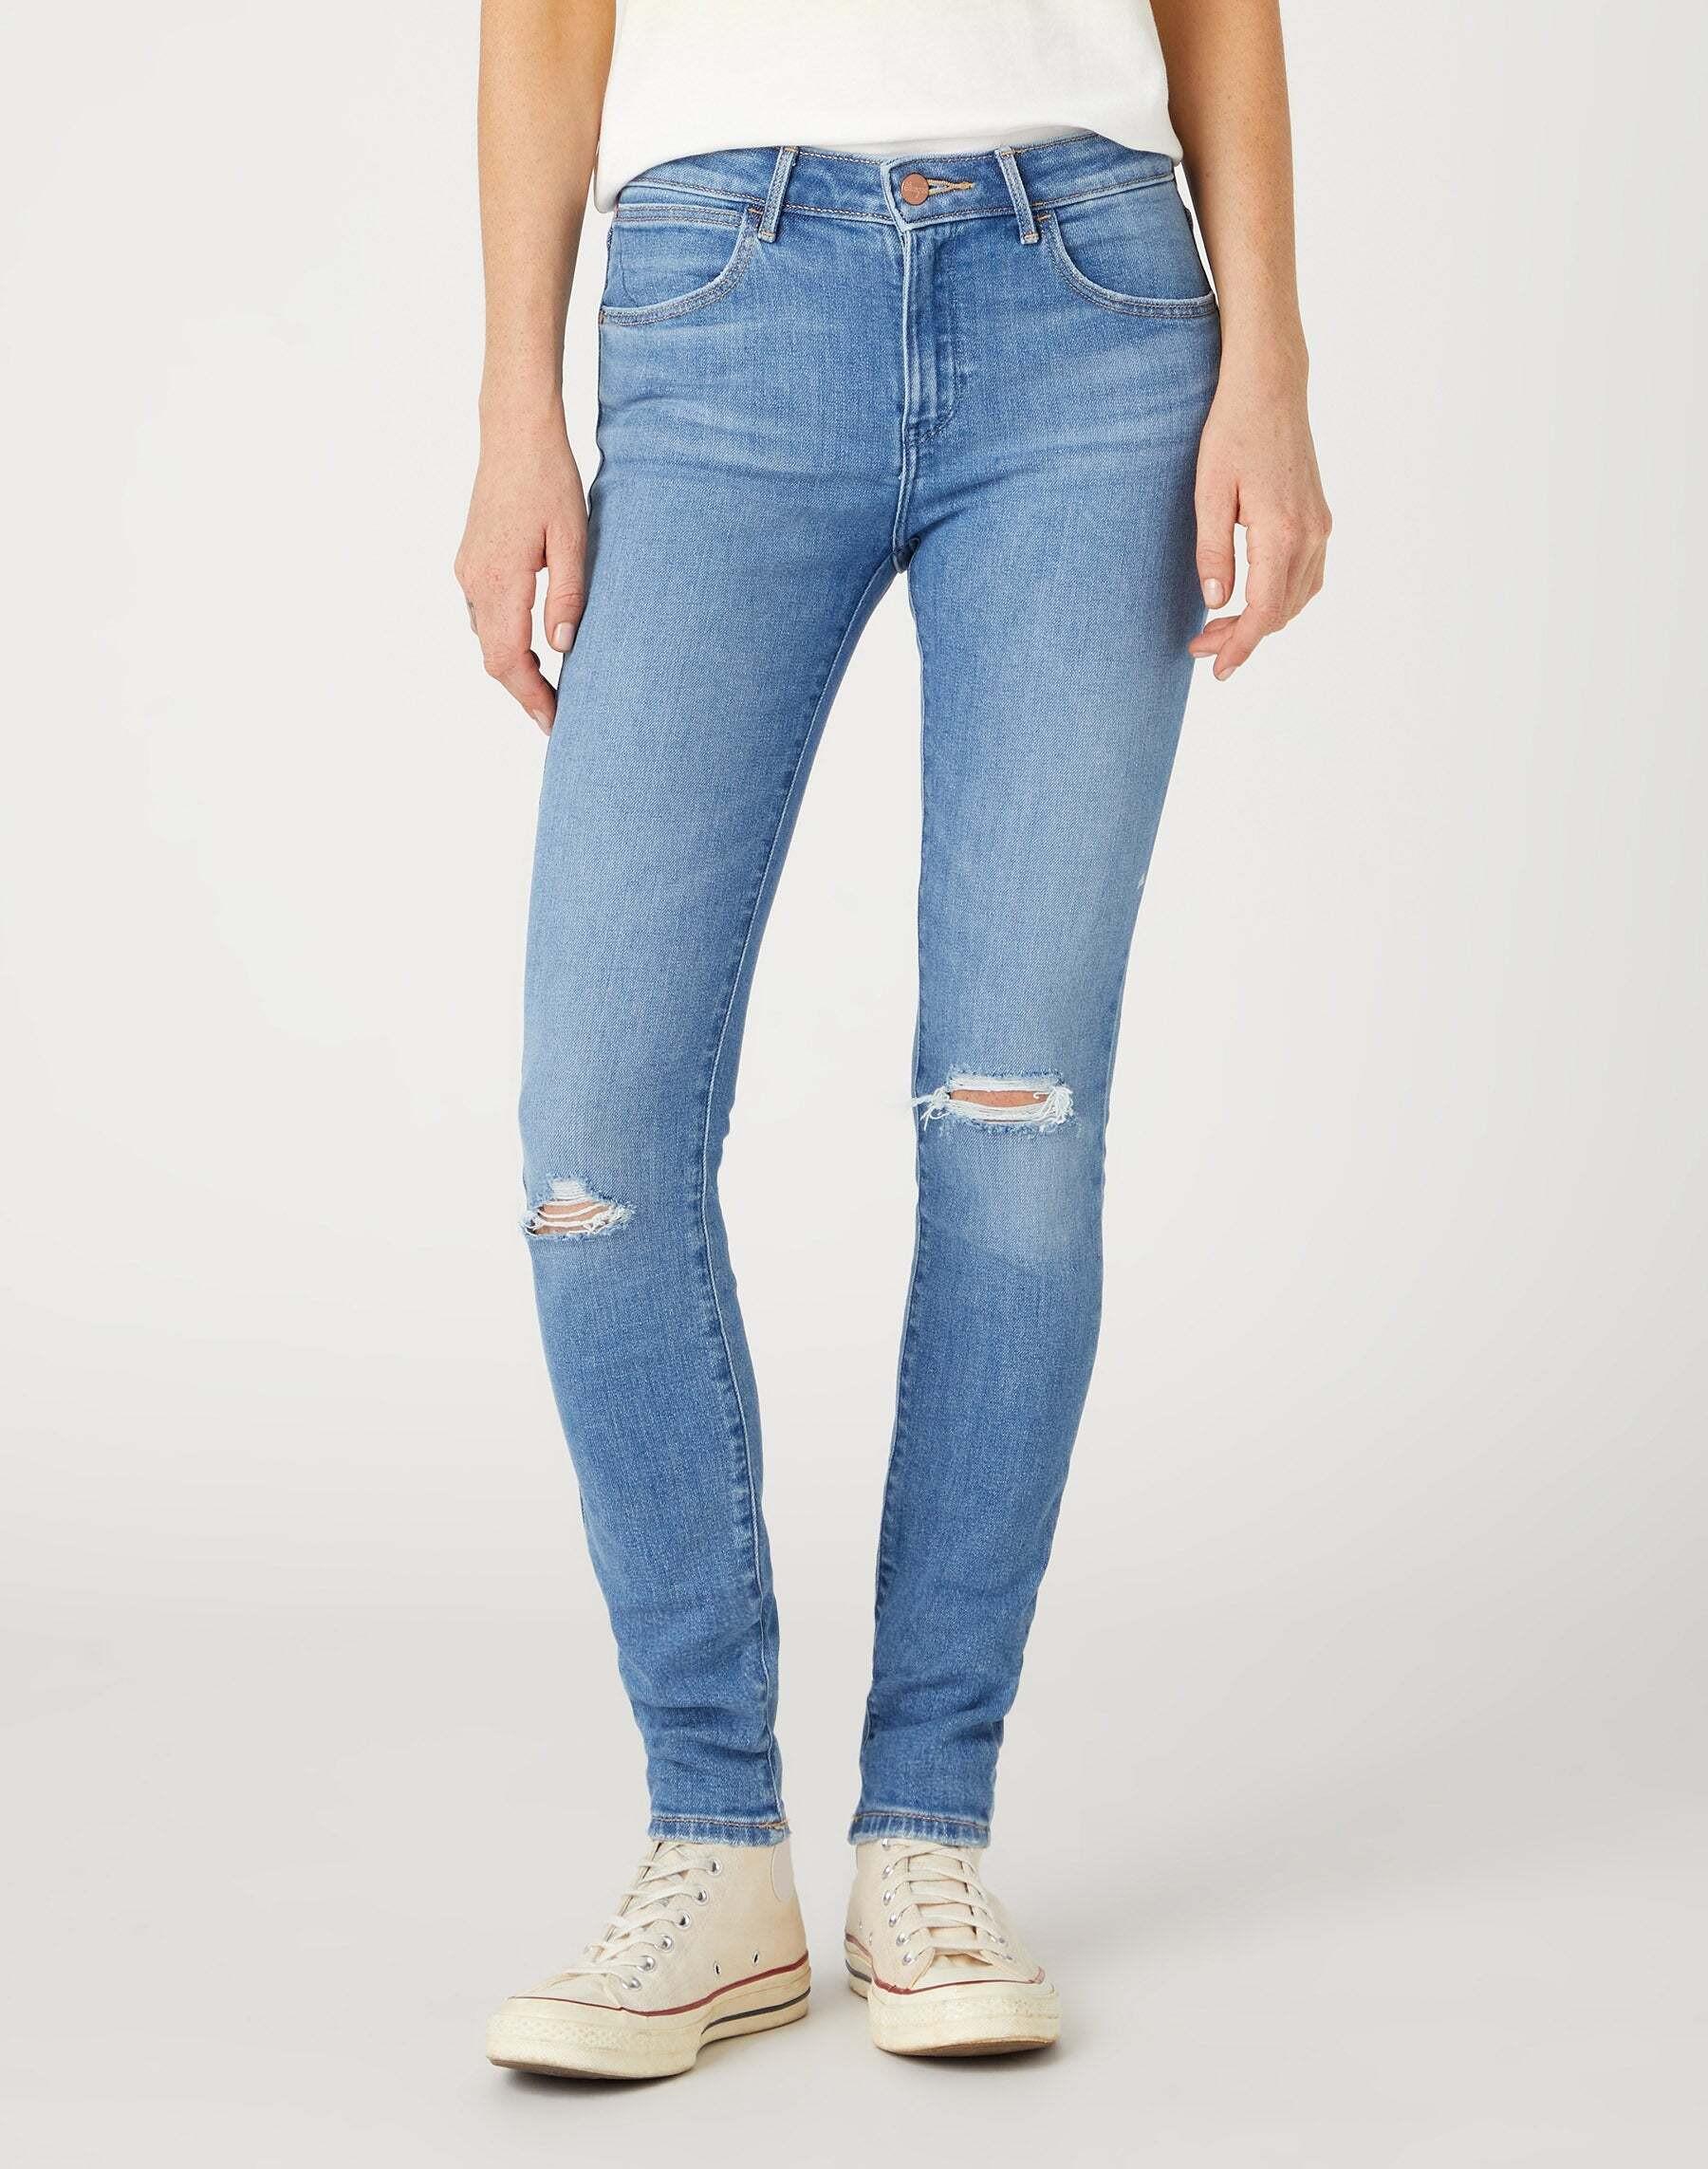 Jeans Skinny Damen Blau L32/W30 von Wrangler